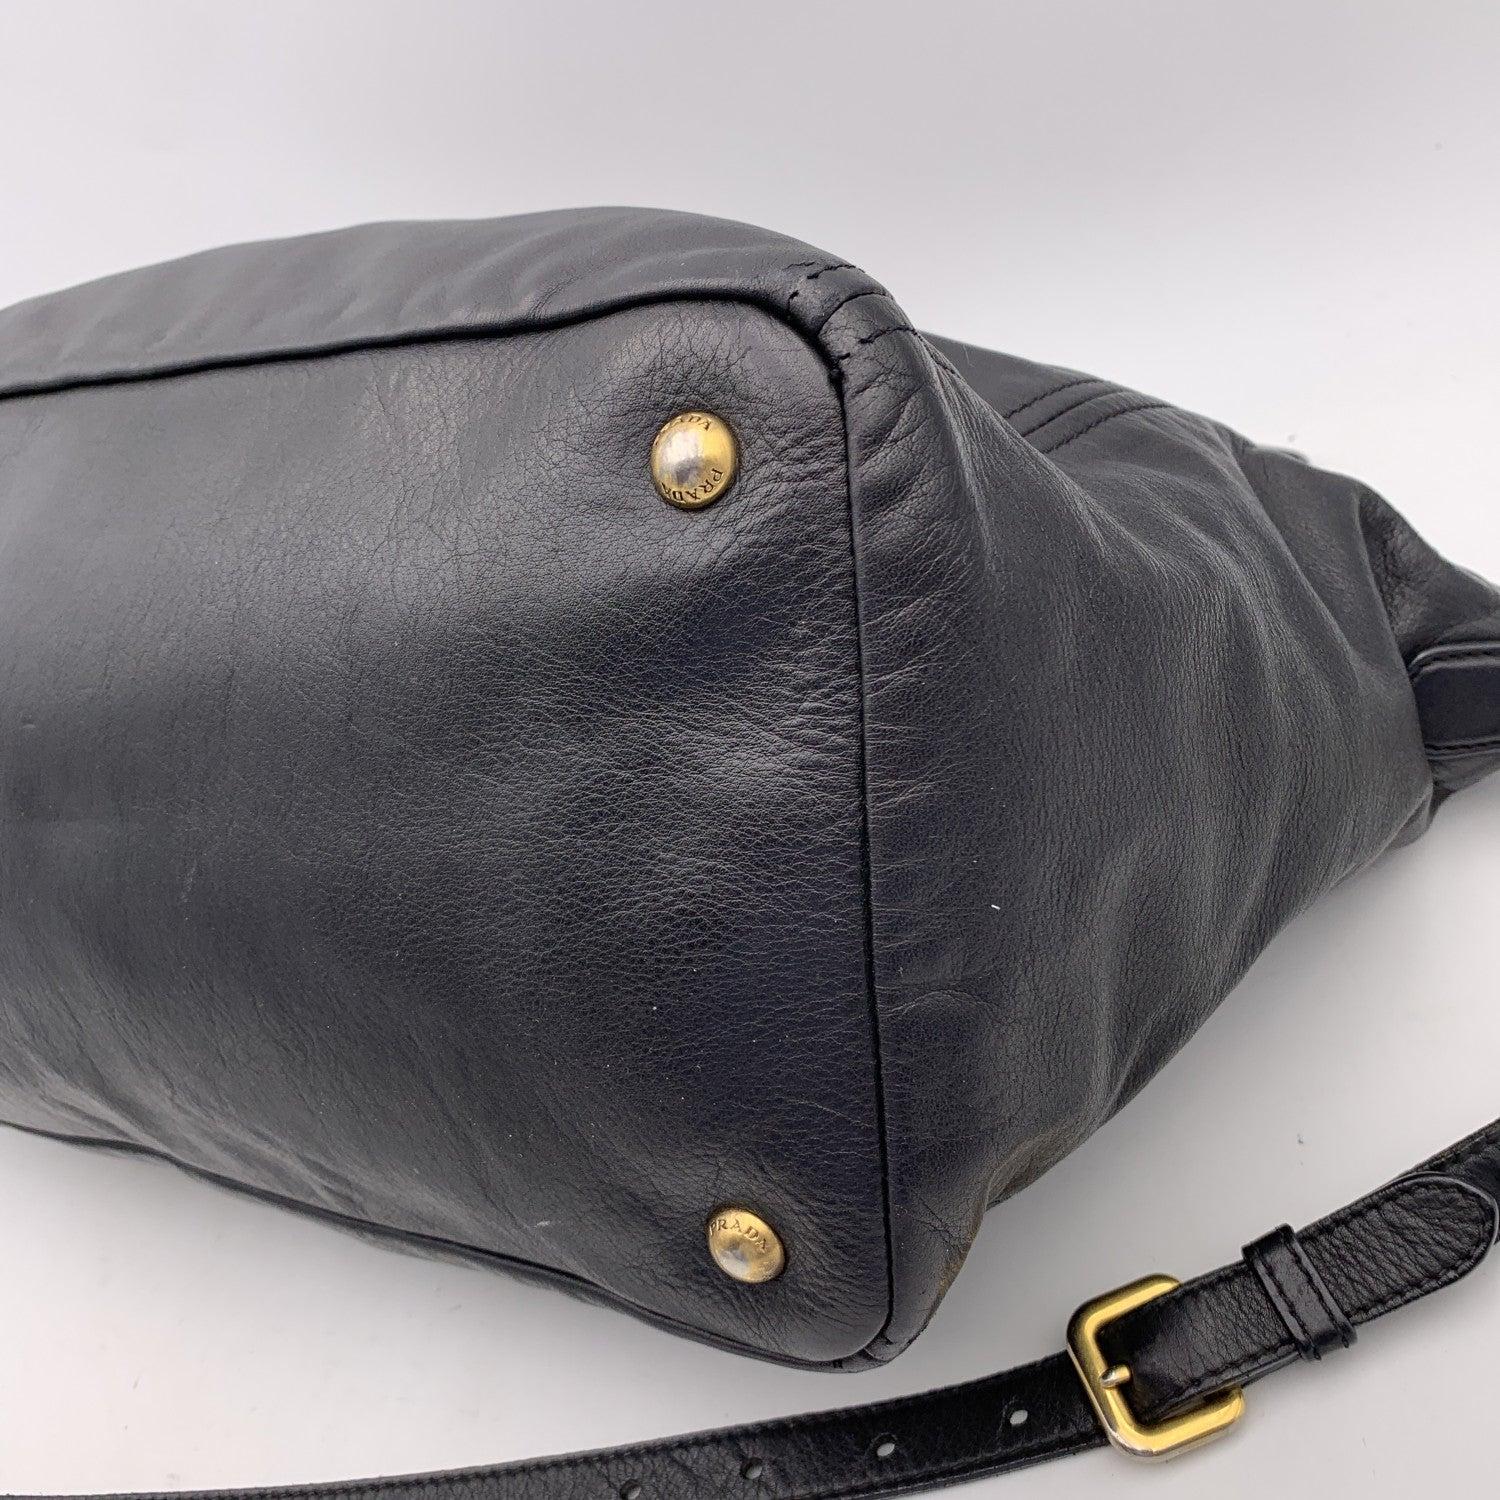 Prada Black Leather East West Bag Handbag with Strap 4